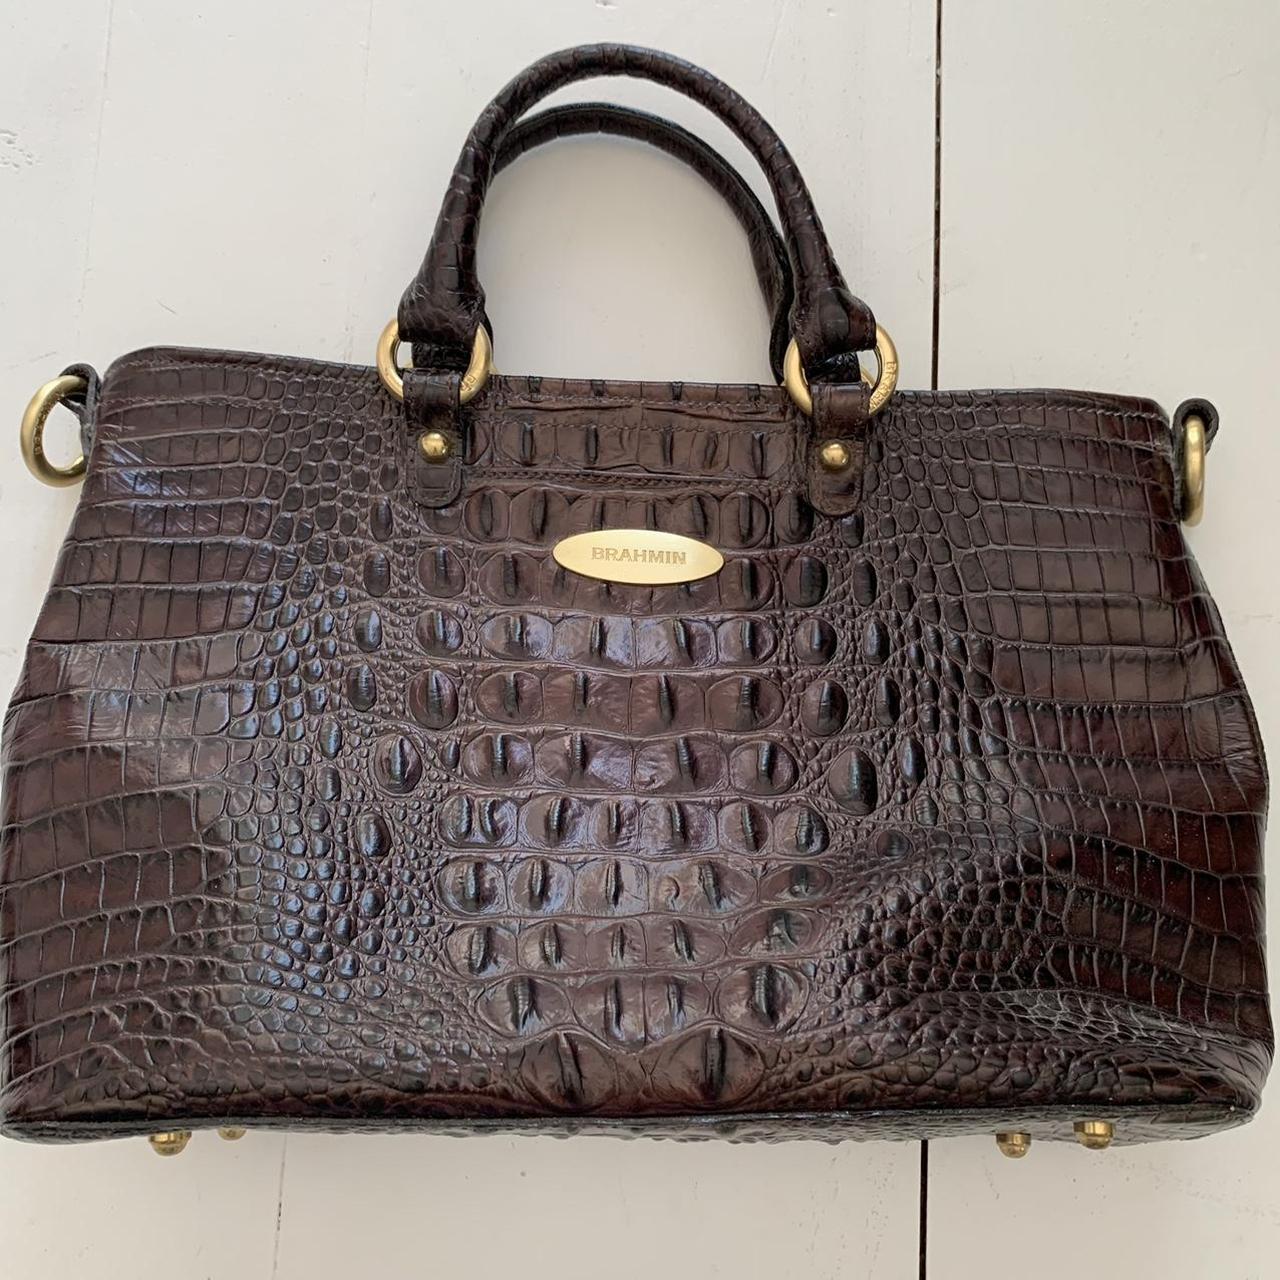 Brahmin Alligator purse | Clothing and Apparel | ksl.com